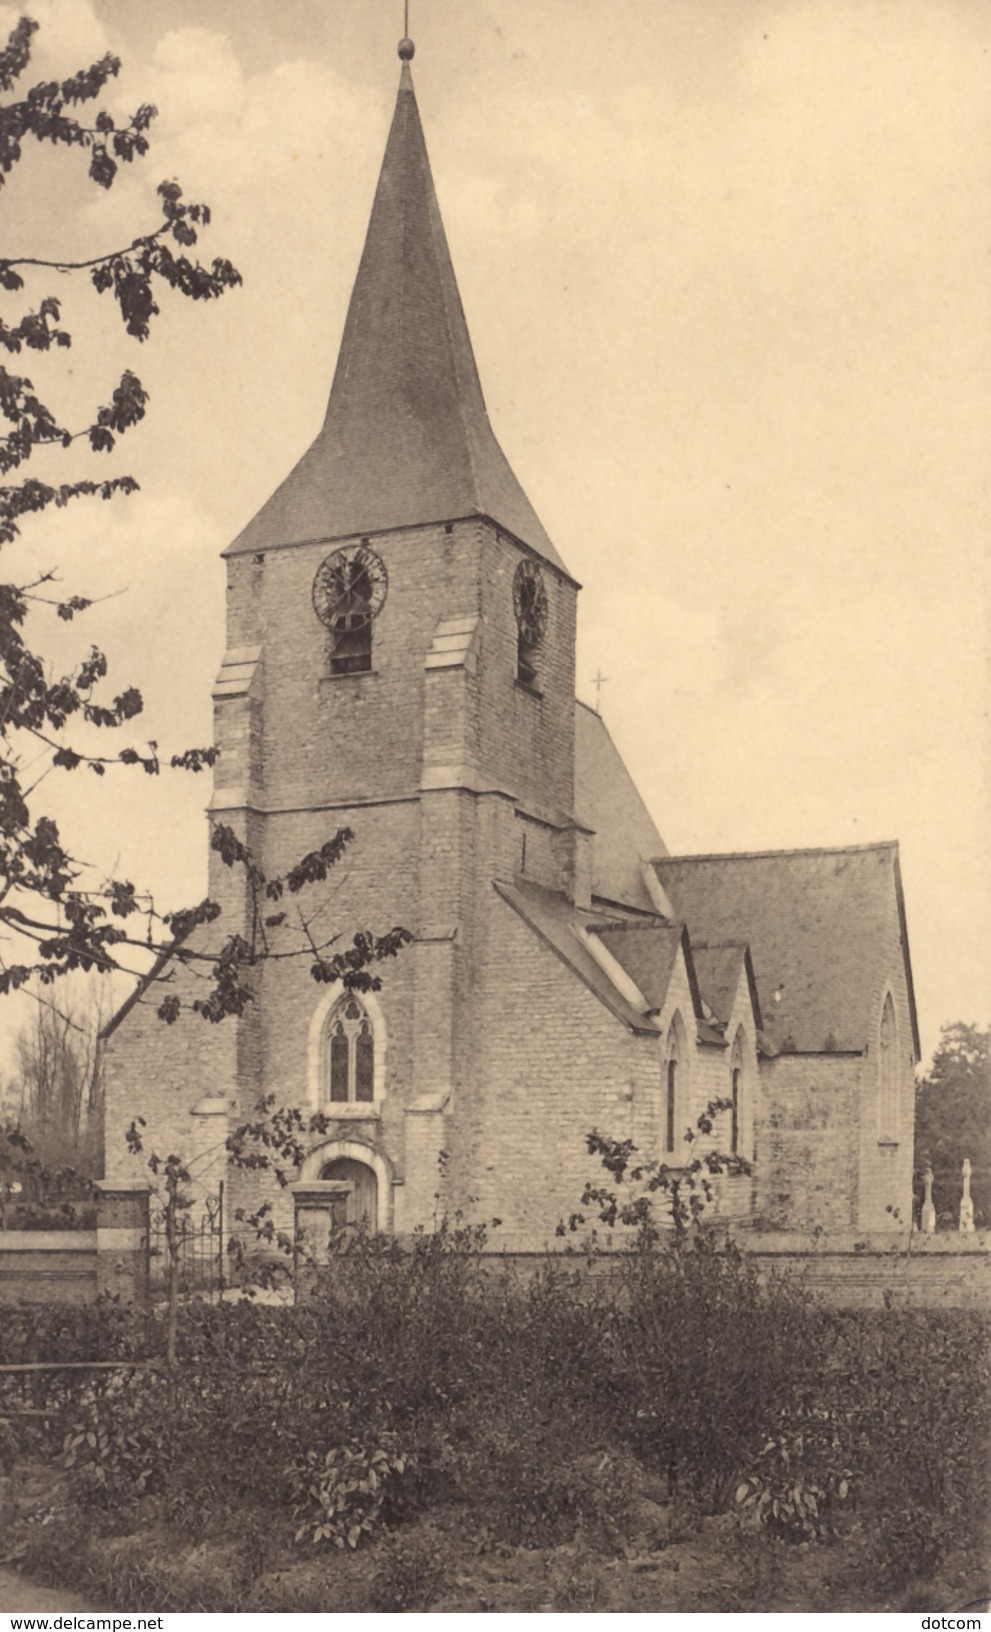 ST.-BRIXIUS-RODE (Meise) - De Kerk - Meise